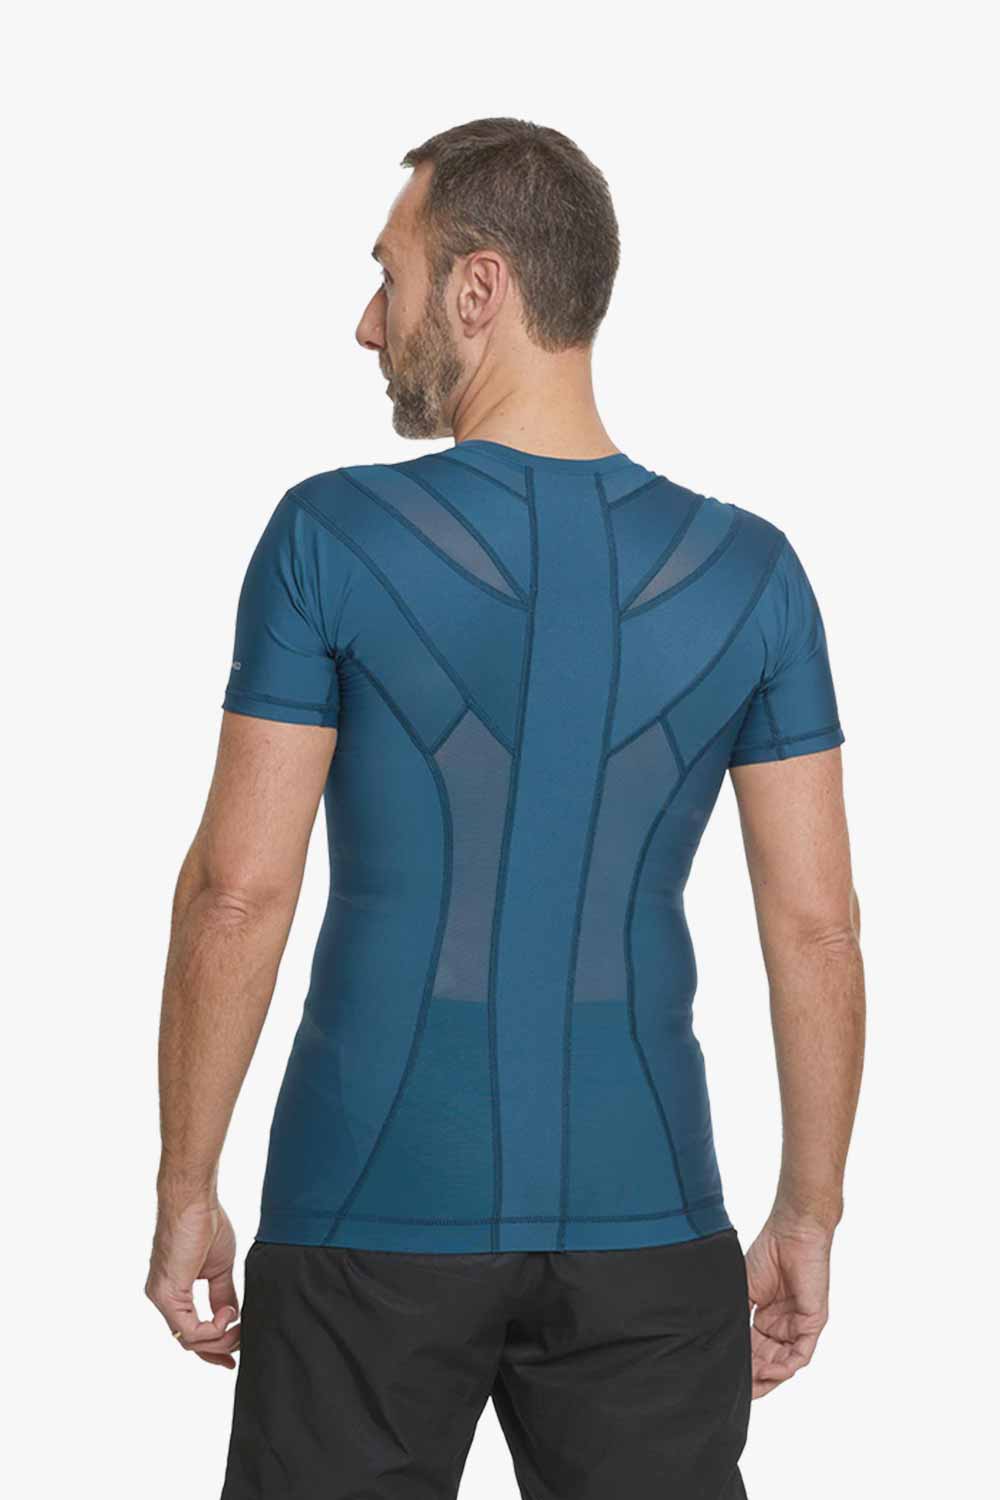 Men's Posture Shirt™ - Blå